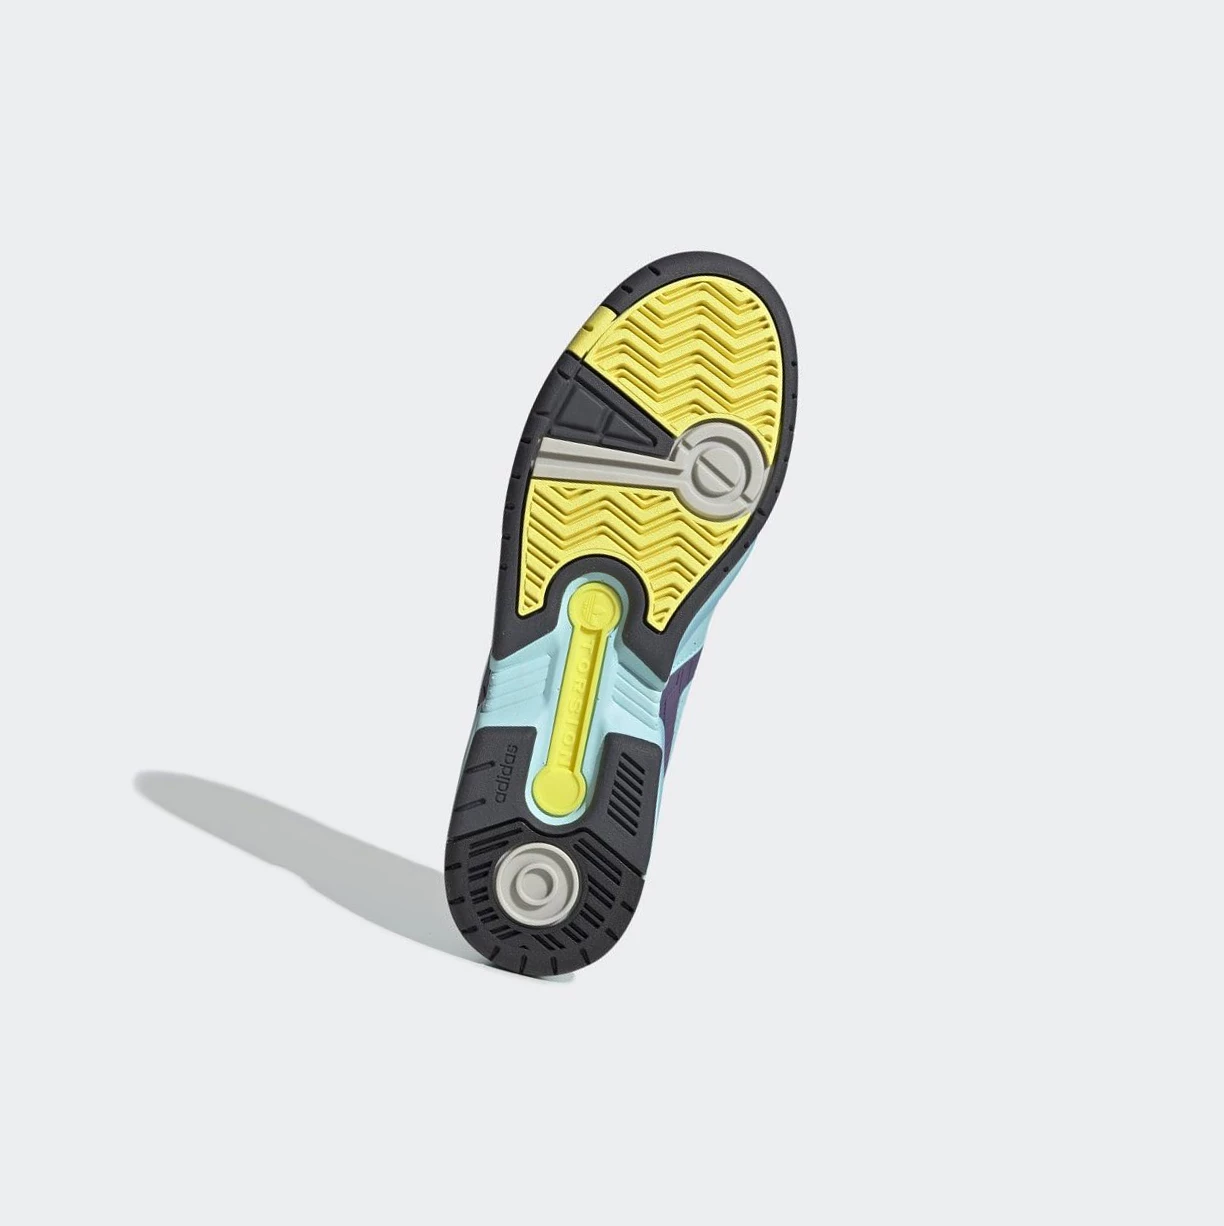 Originálne Topánky Adidas Torsion Comp Damske Modre | 085SKXCTDMW